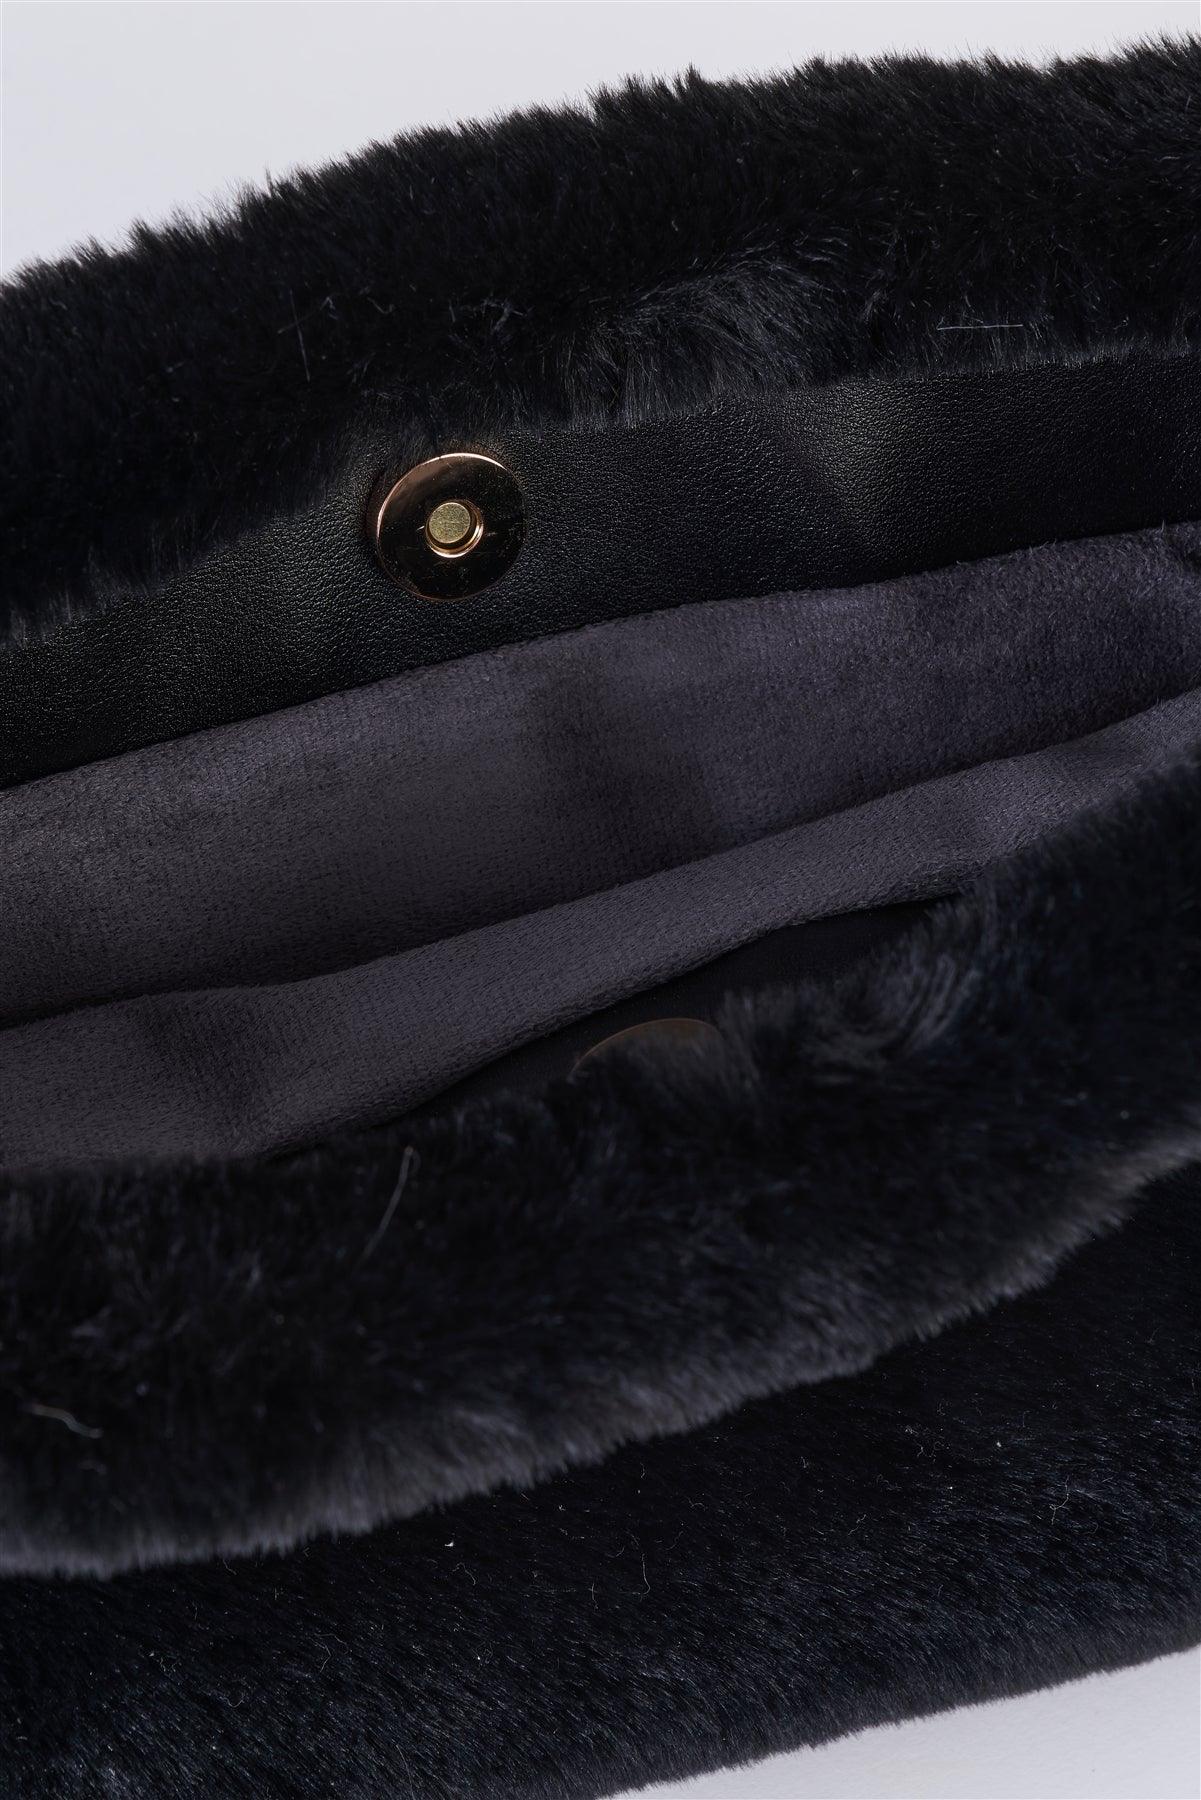 Black Faux Fur Hidden Magnetic Snap Button Closure Crossbody Bag / Clutch With Hidden Hand Strap Loop / 3 bags